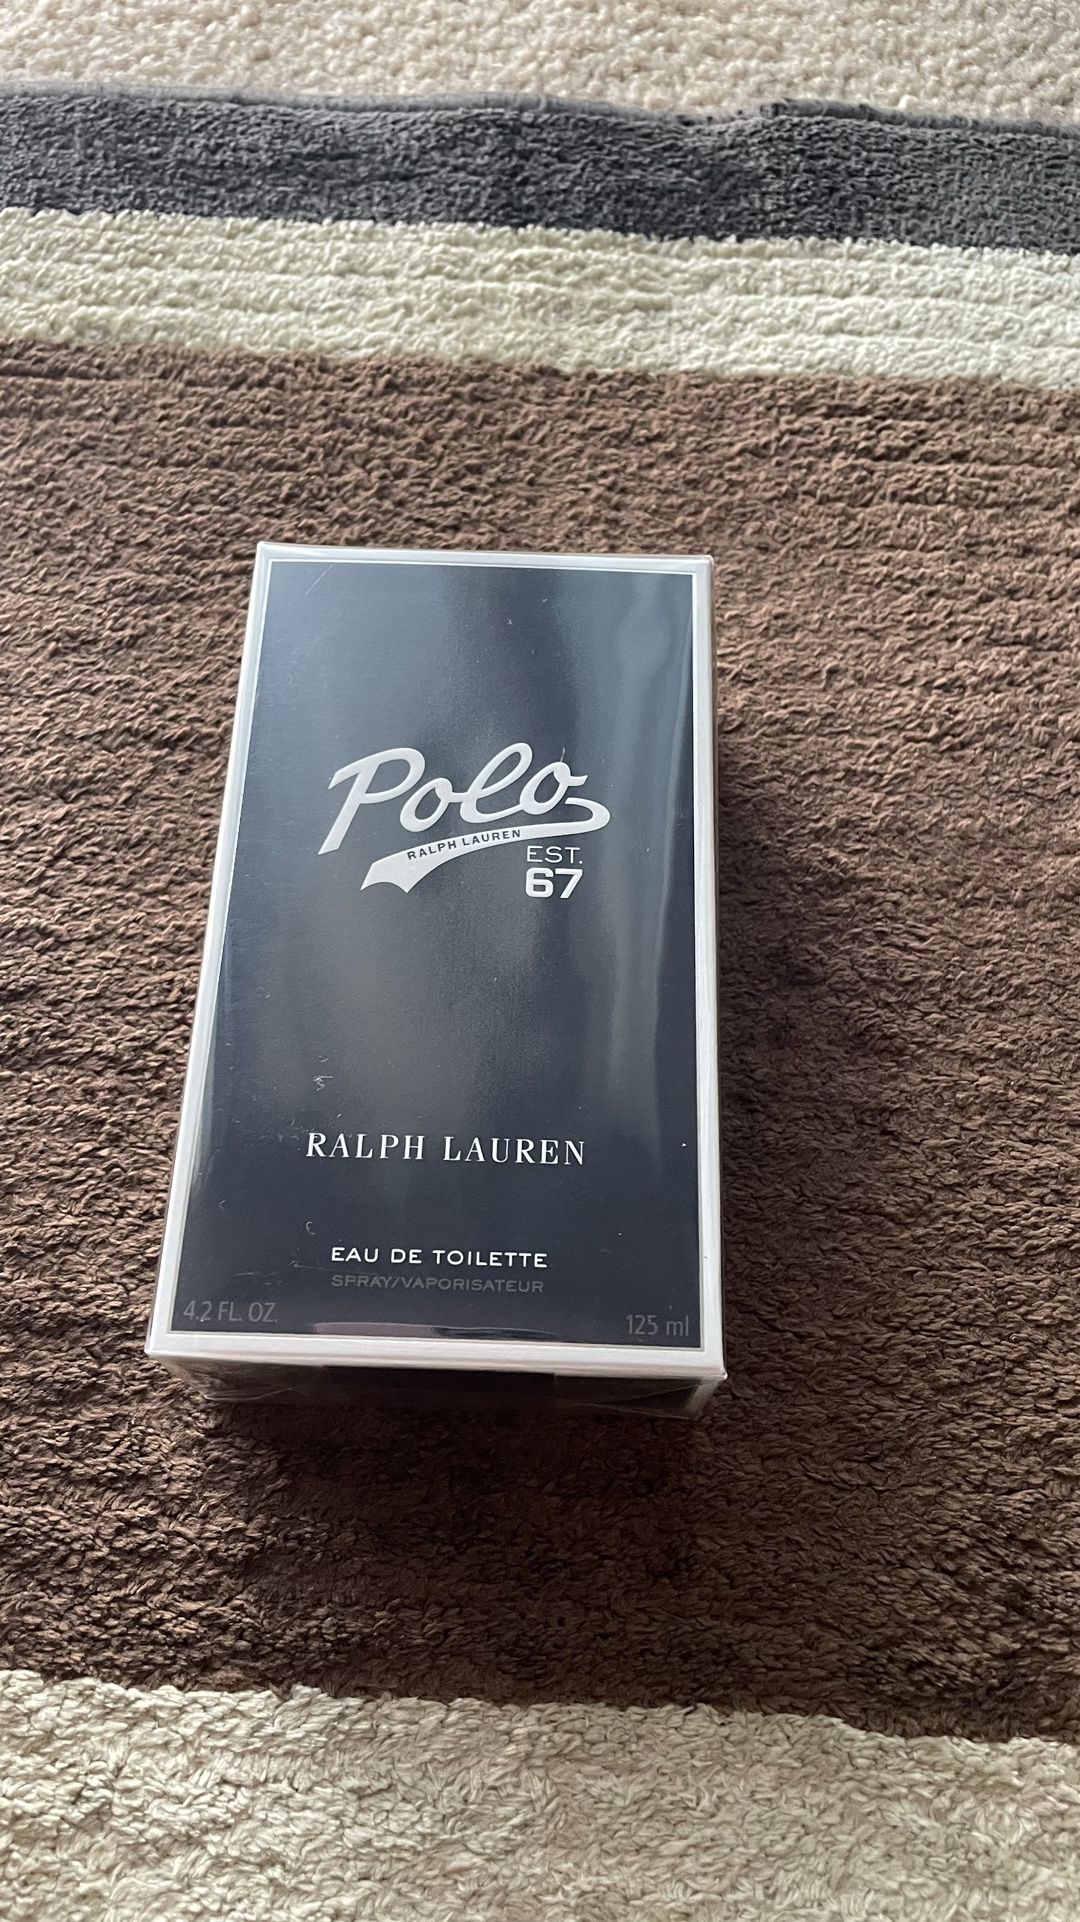 Polo 67 Ralph Lauren 